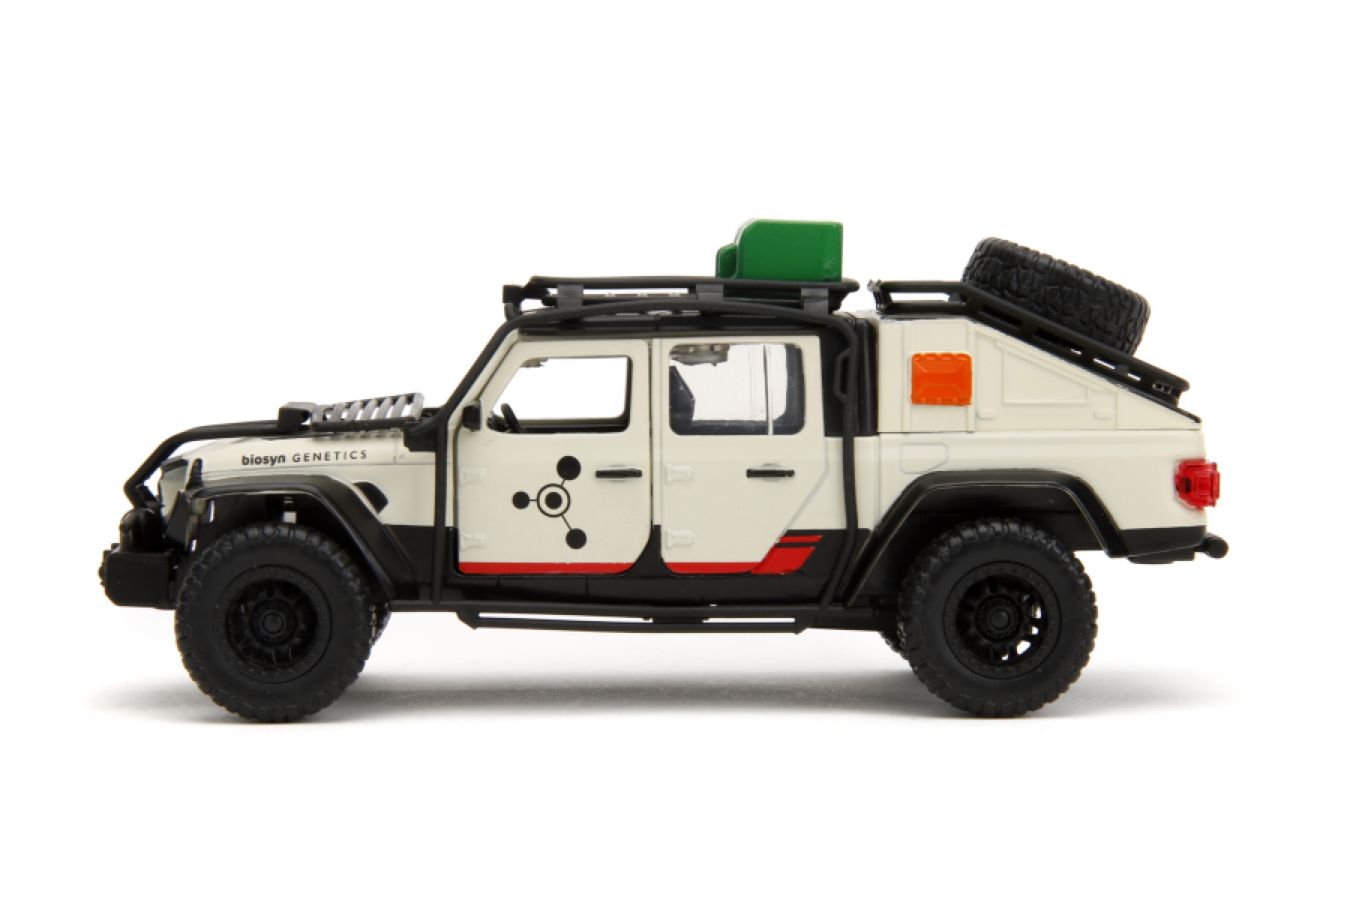 Jurassic World - 2020 Jeep Gladiator 1:32 Scale Vehicle